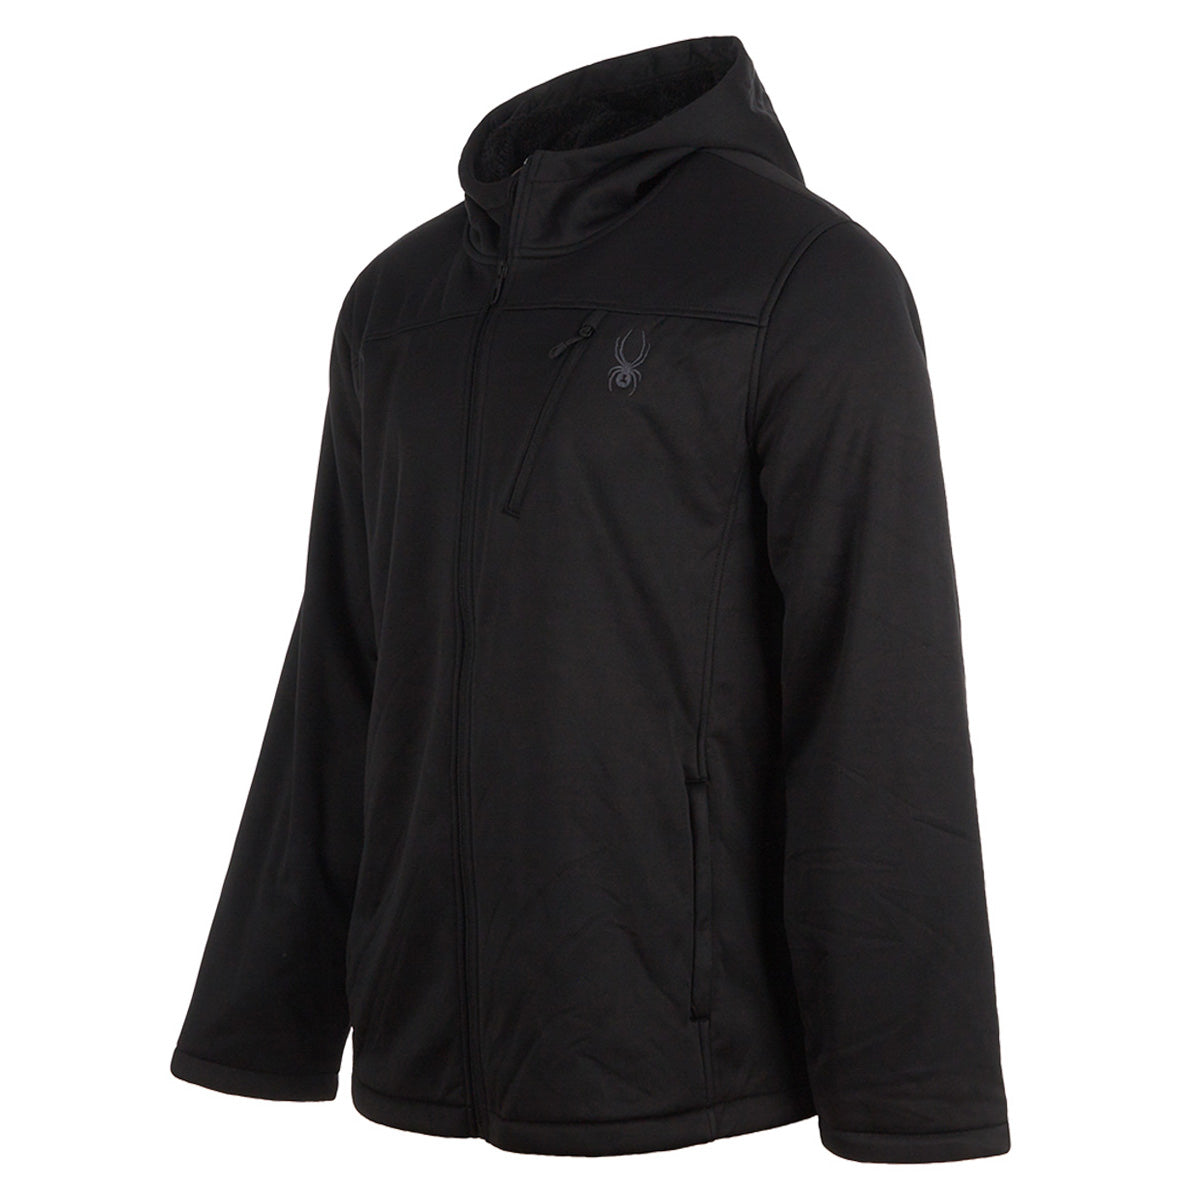 Spyder Force Full Zip Jacket in Black for Men